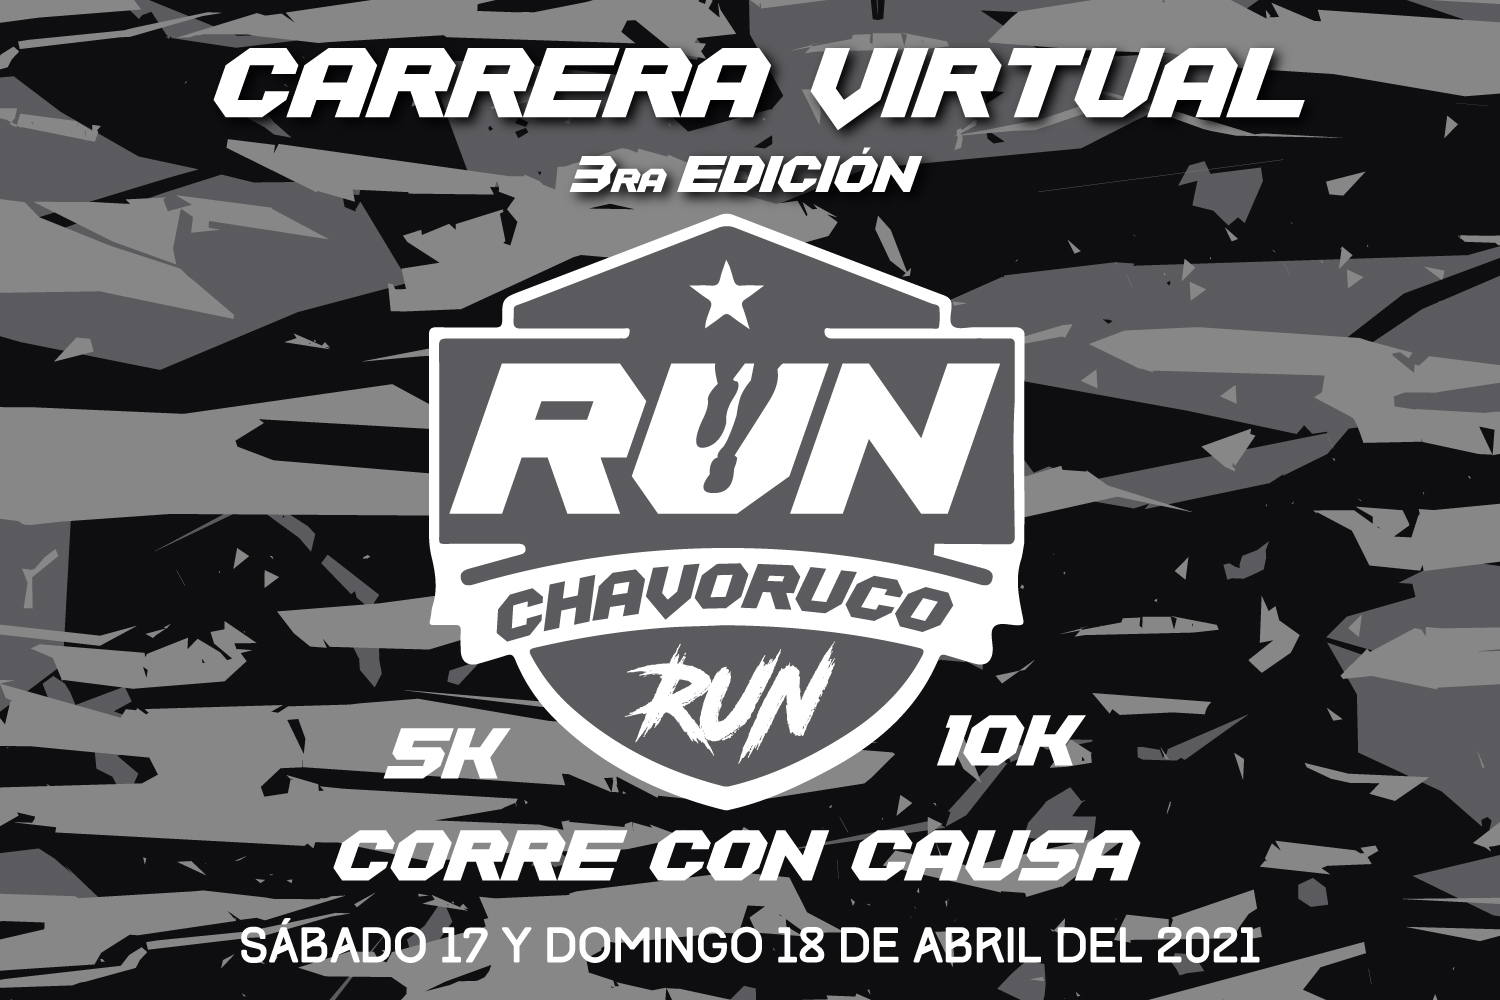 CARRERA VIRTUAL 3RA EDICION RUN CHAVORUCO RUN 5K Y 10K